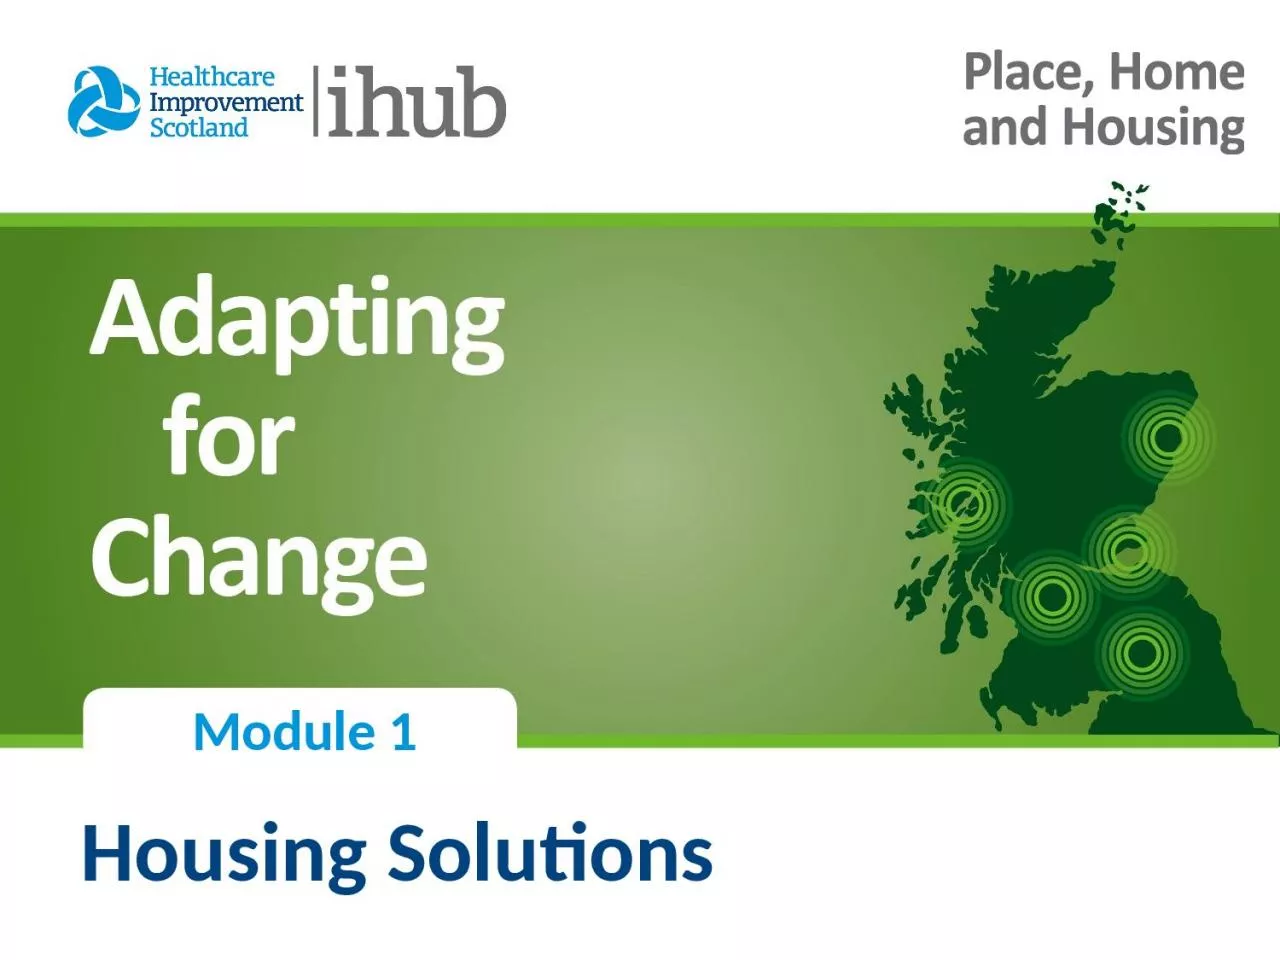 Housing Solutions Module 1